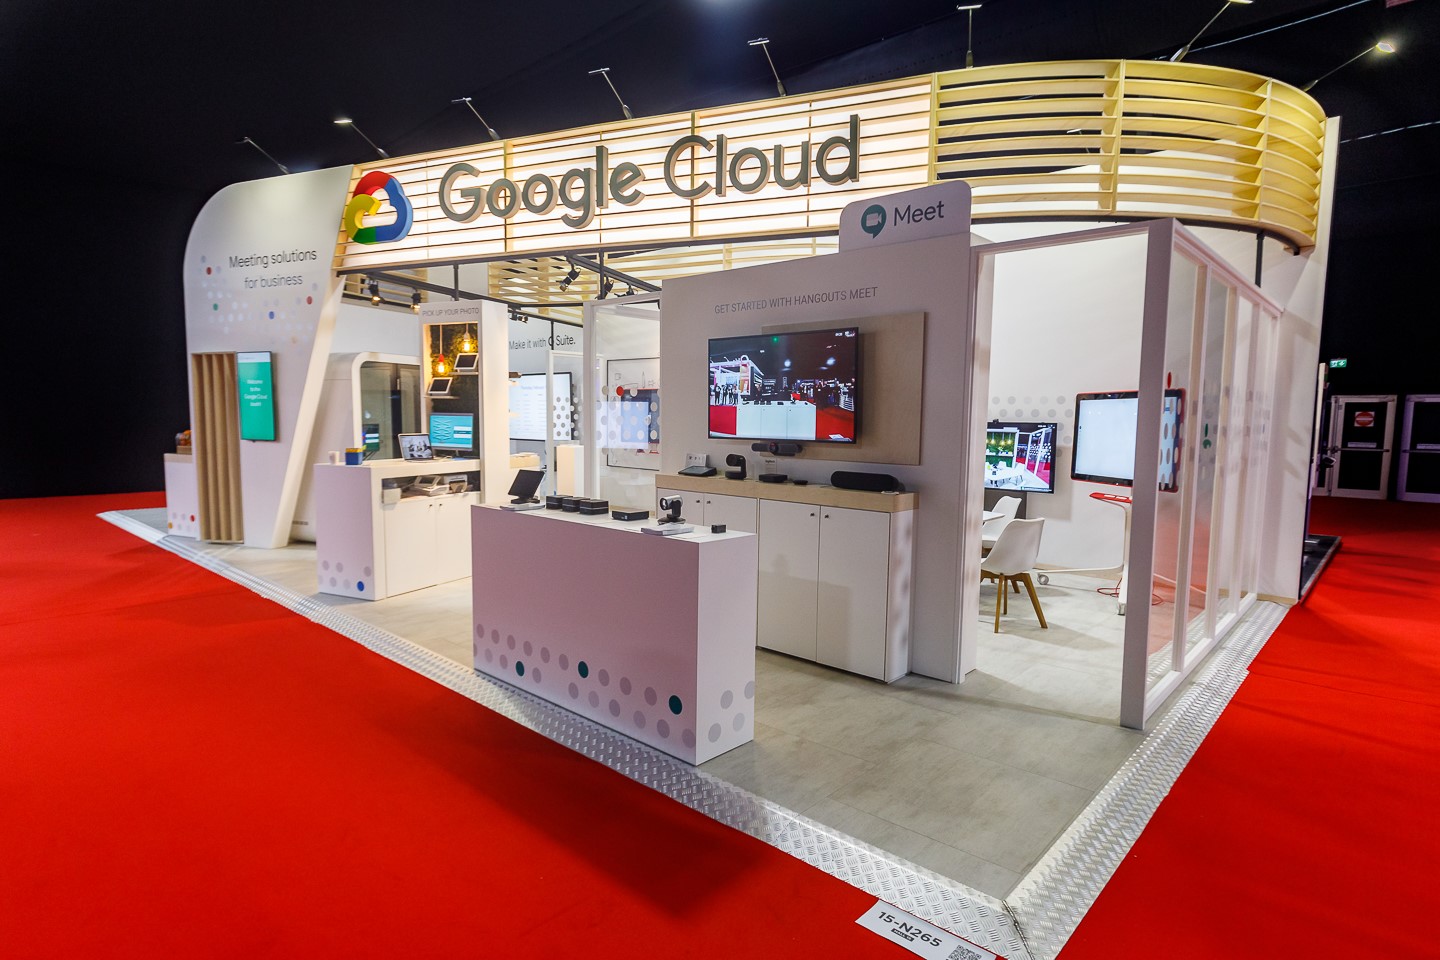 Piepschuim 3d letters Google Cloud groot